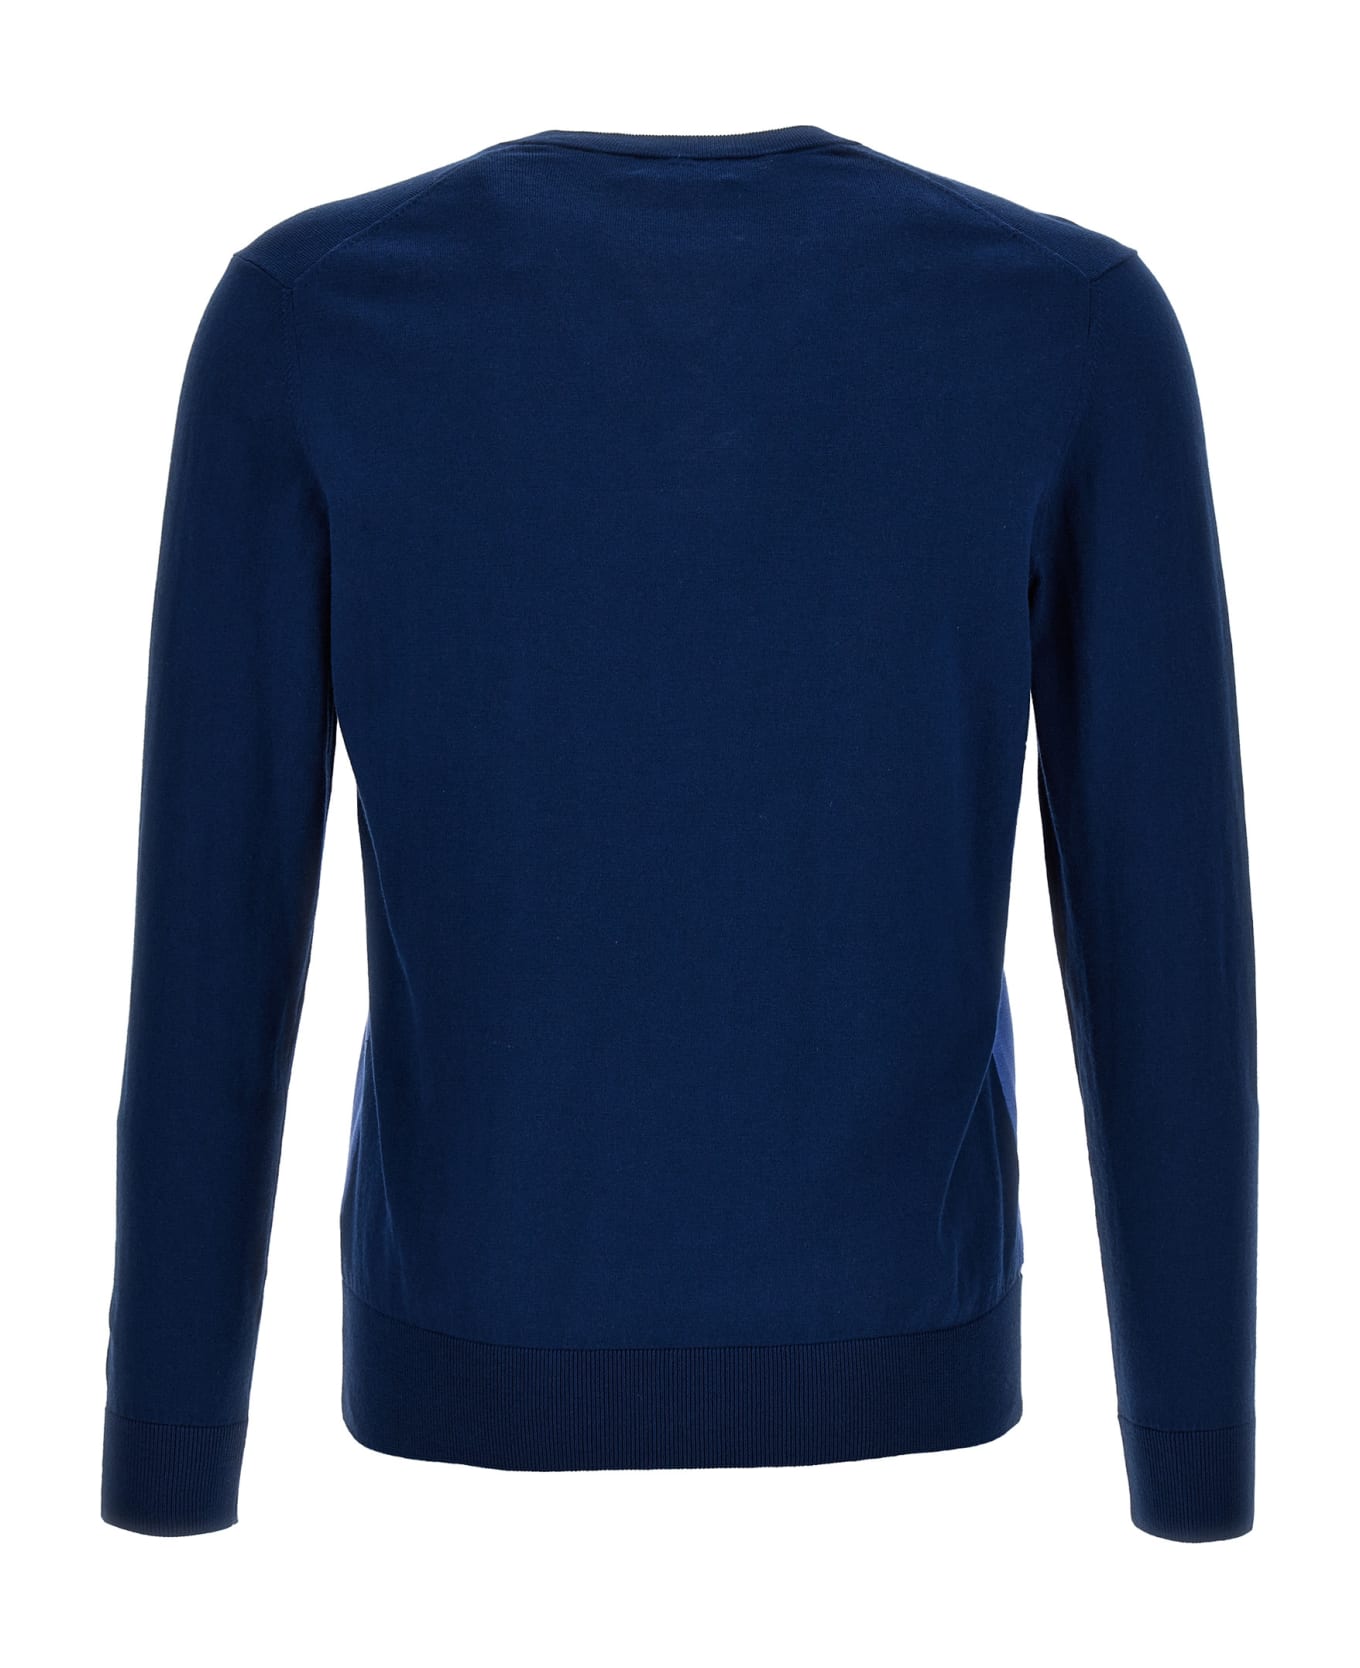 Ballantyne 'argyle' Sweater - Blue